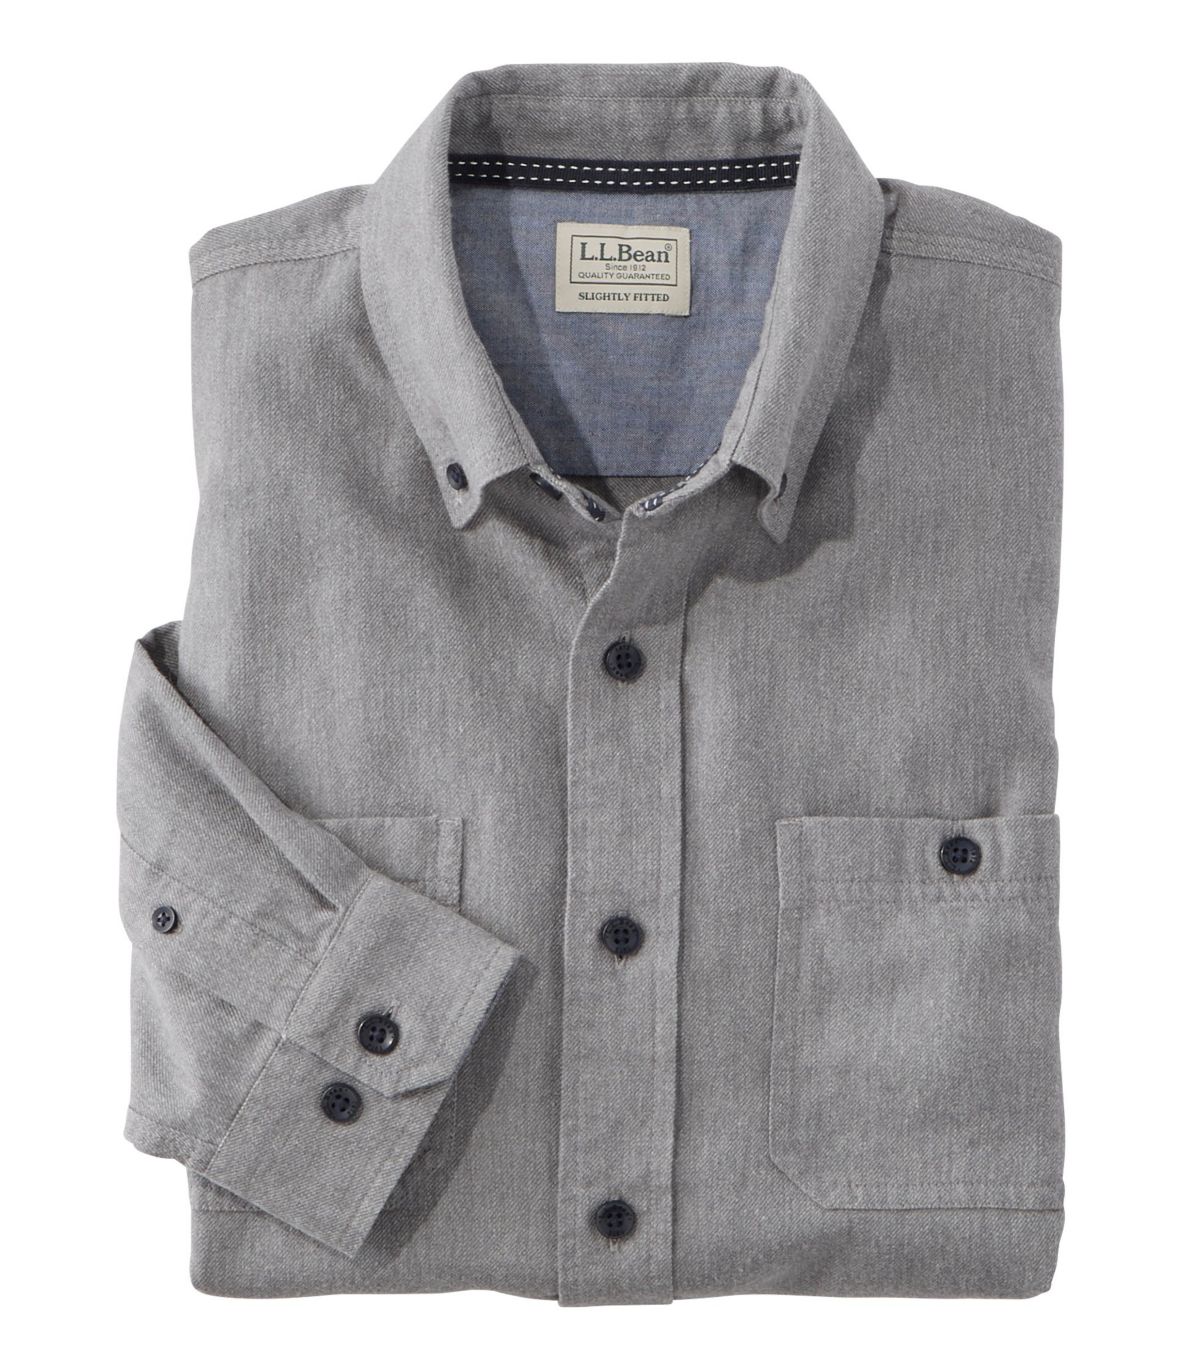 Men's Rangeley Flannel Shirt, Long-Sleeve, Slightly Fitted